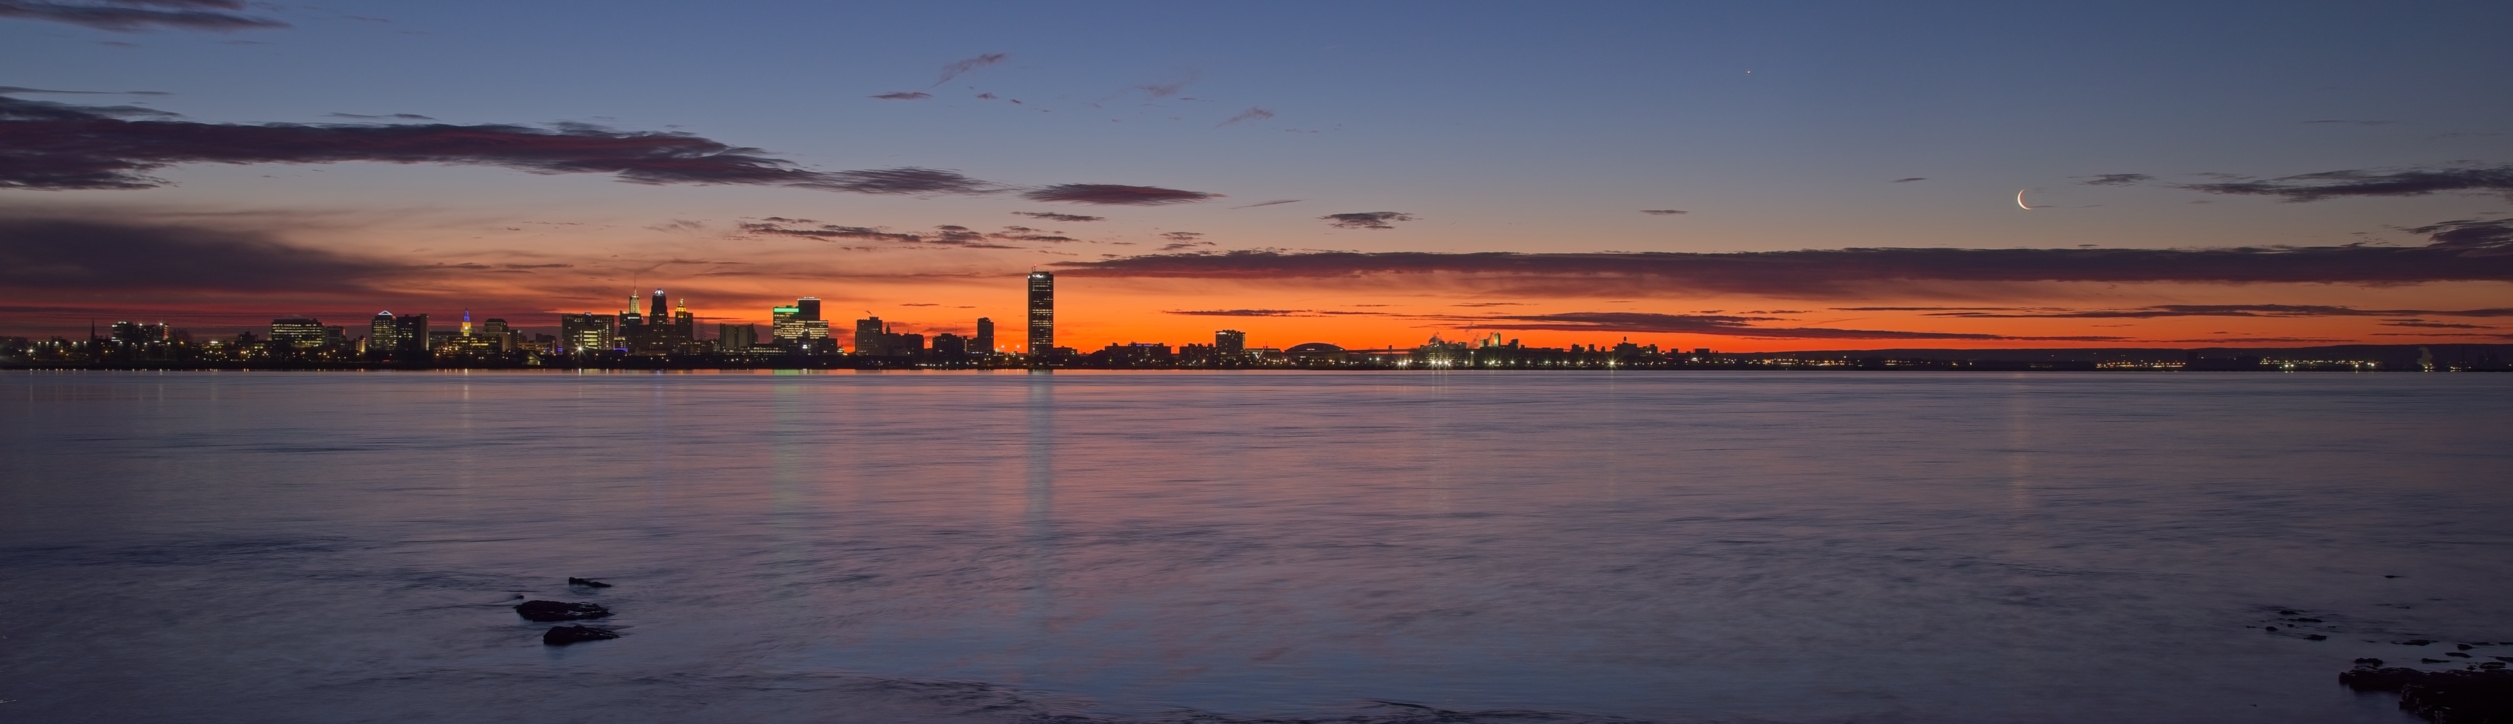 Morning Twilight over Buffalo, New York, USA by Pierre Williot